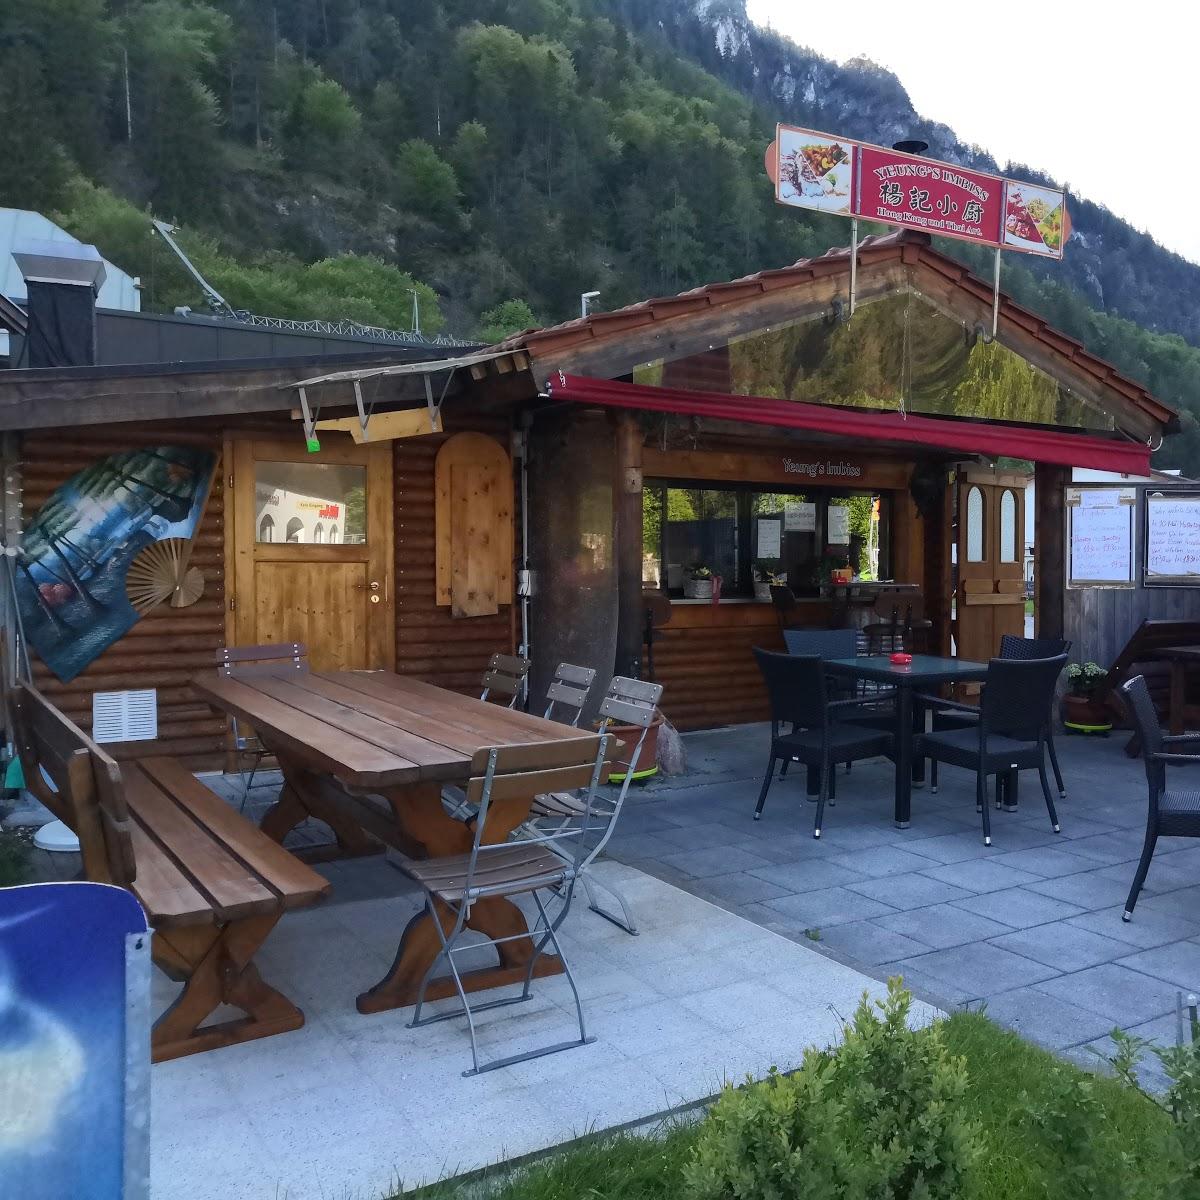 Restaurant "Yeung‘s Imbiss" in Berchtesgaden